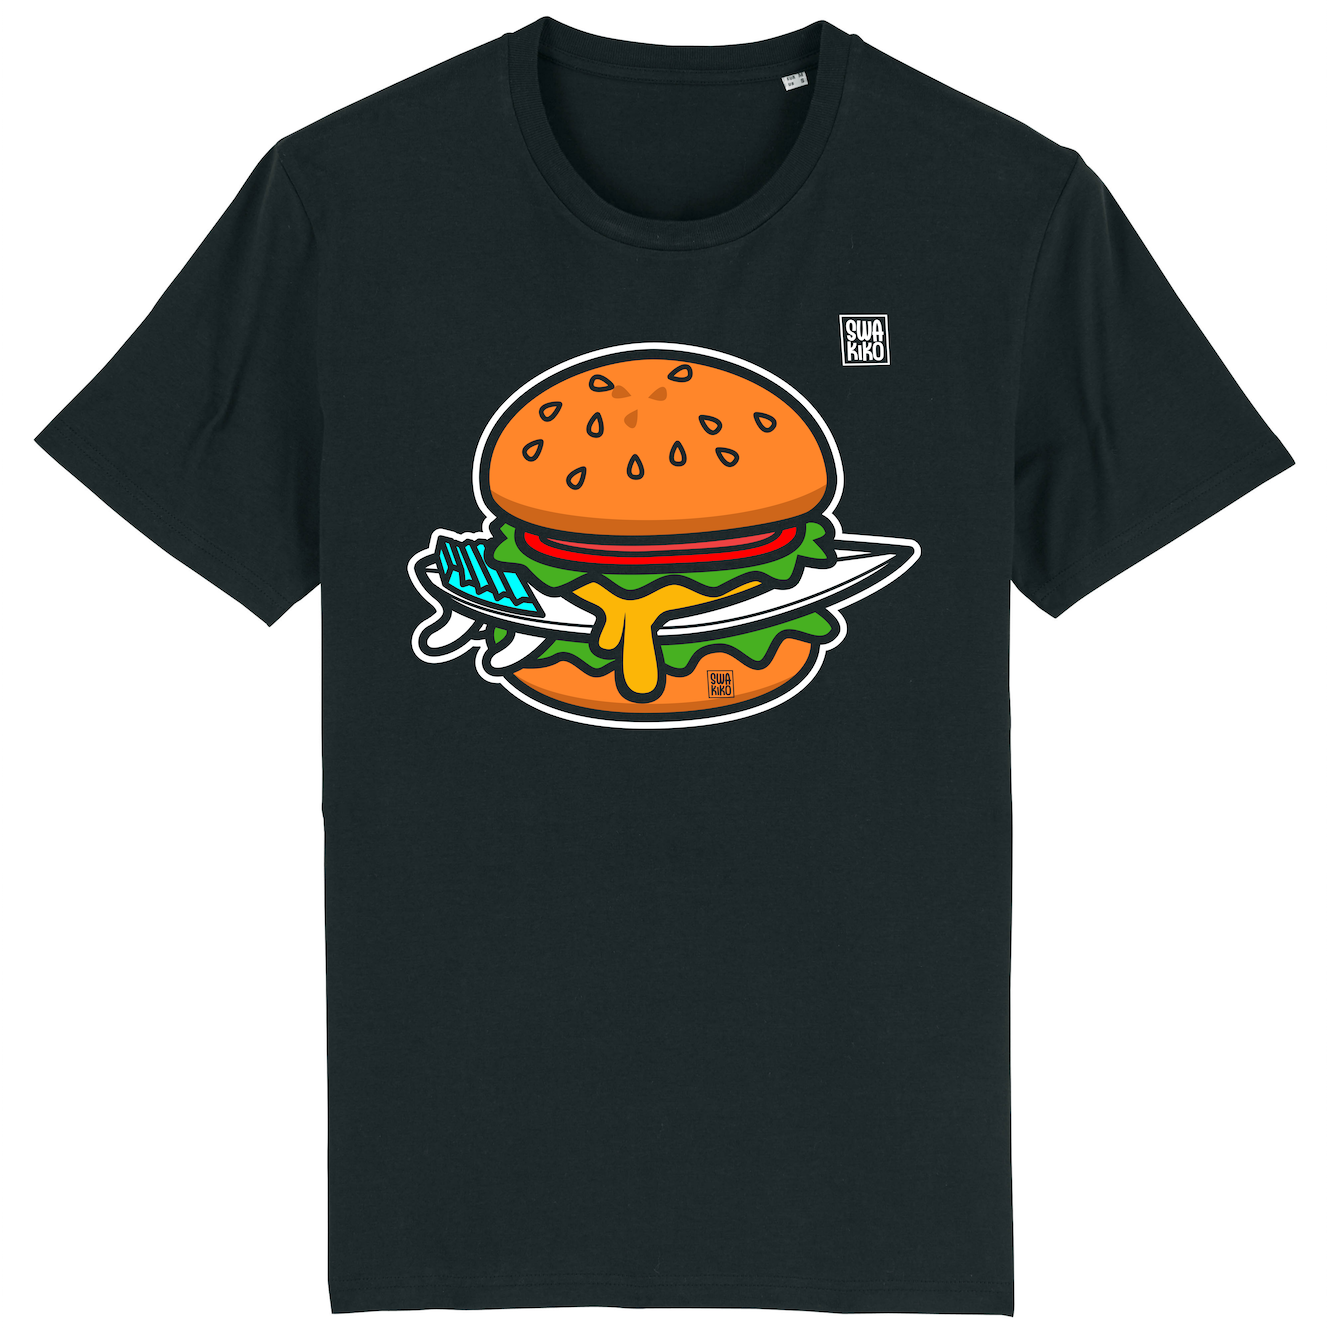 T-shirt Surfburger, black, men